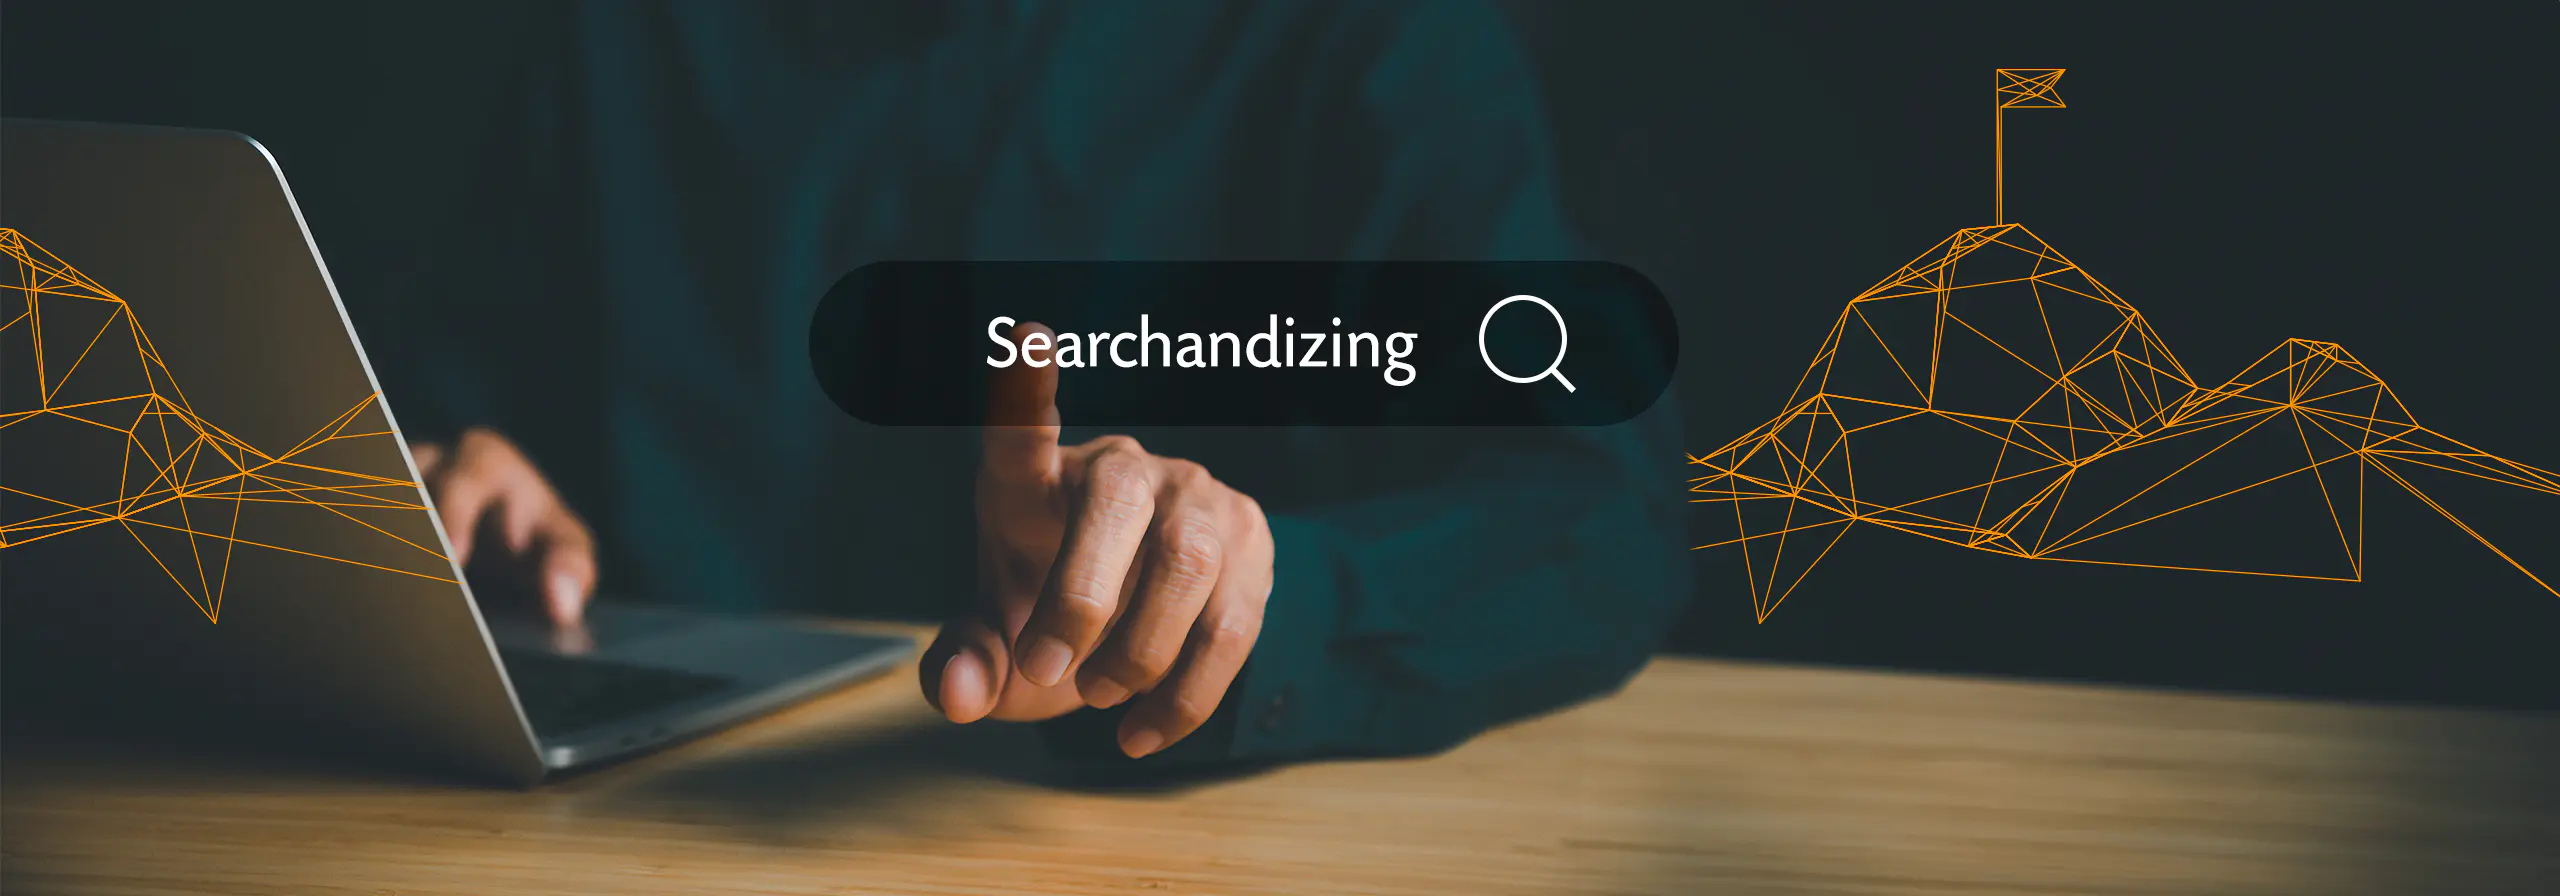 Searchandizing